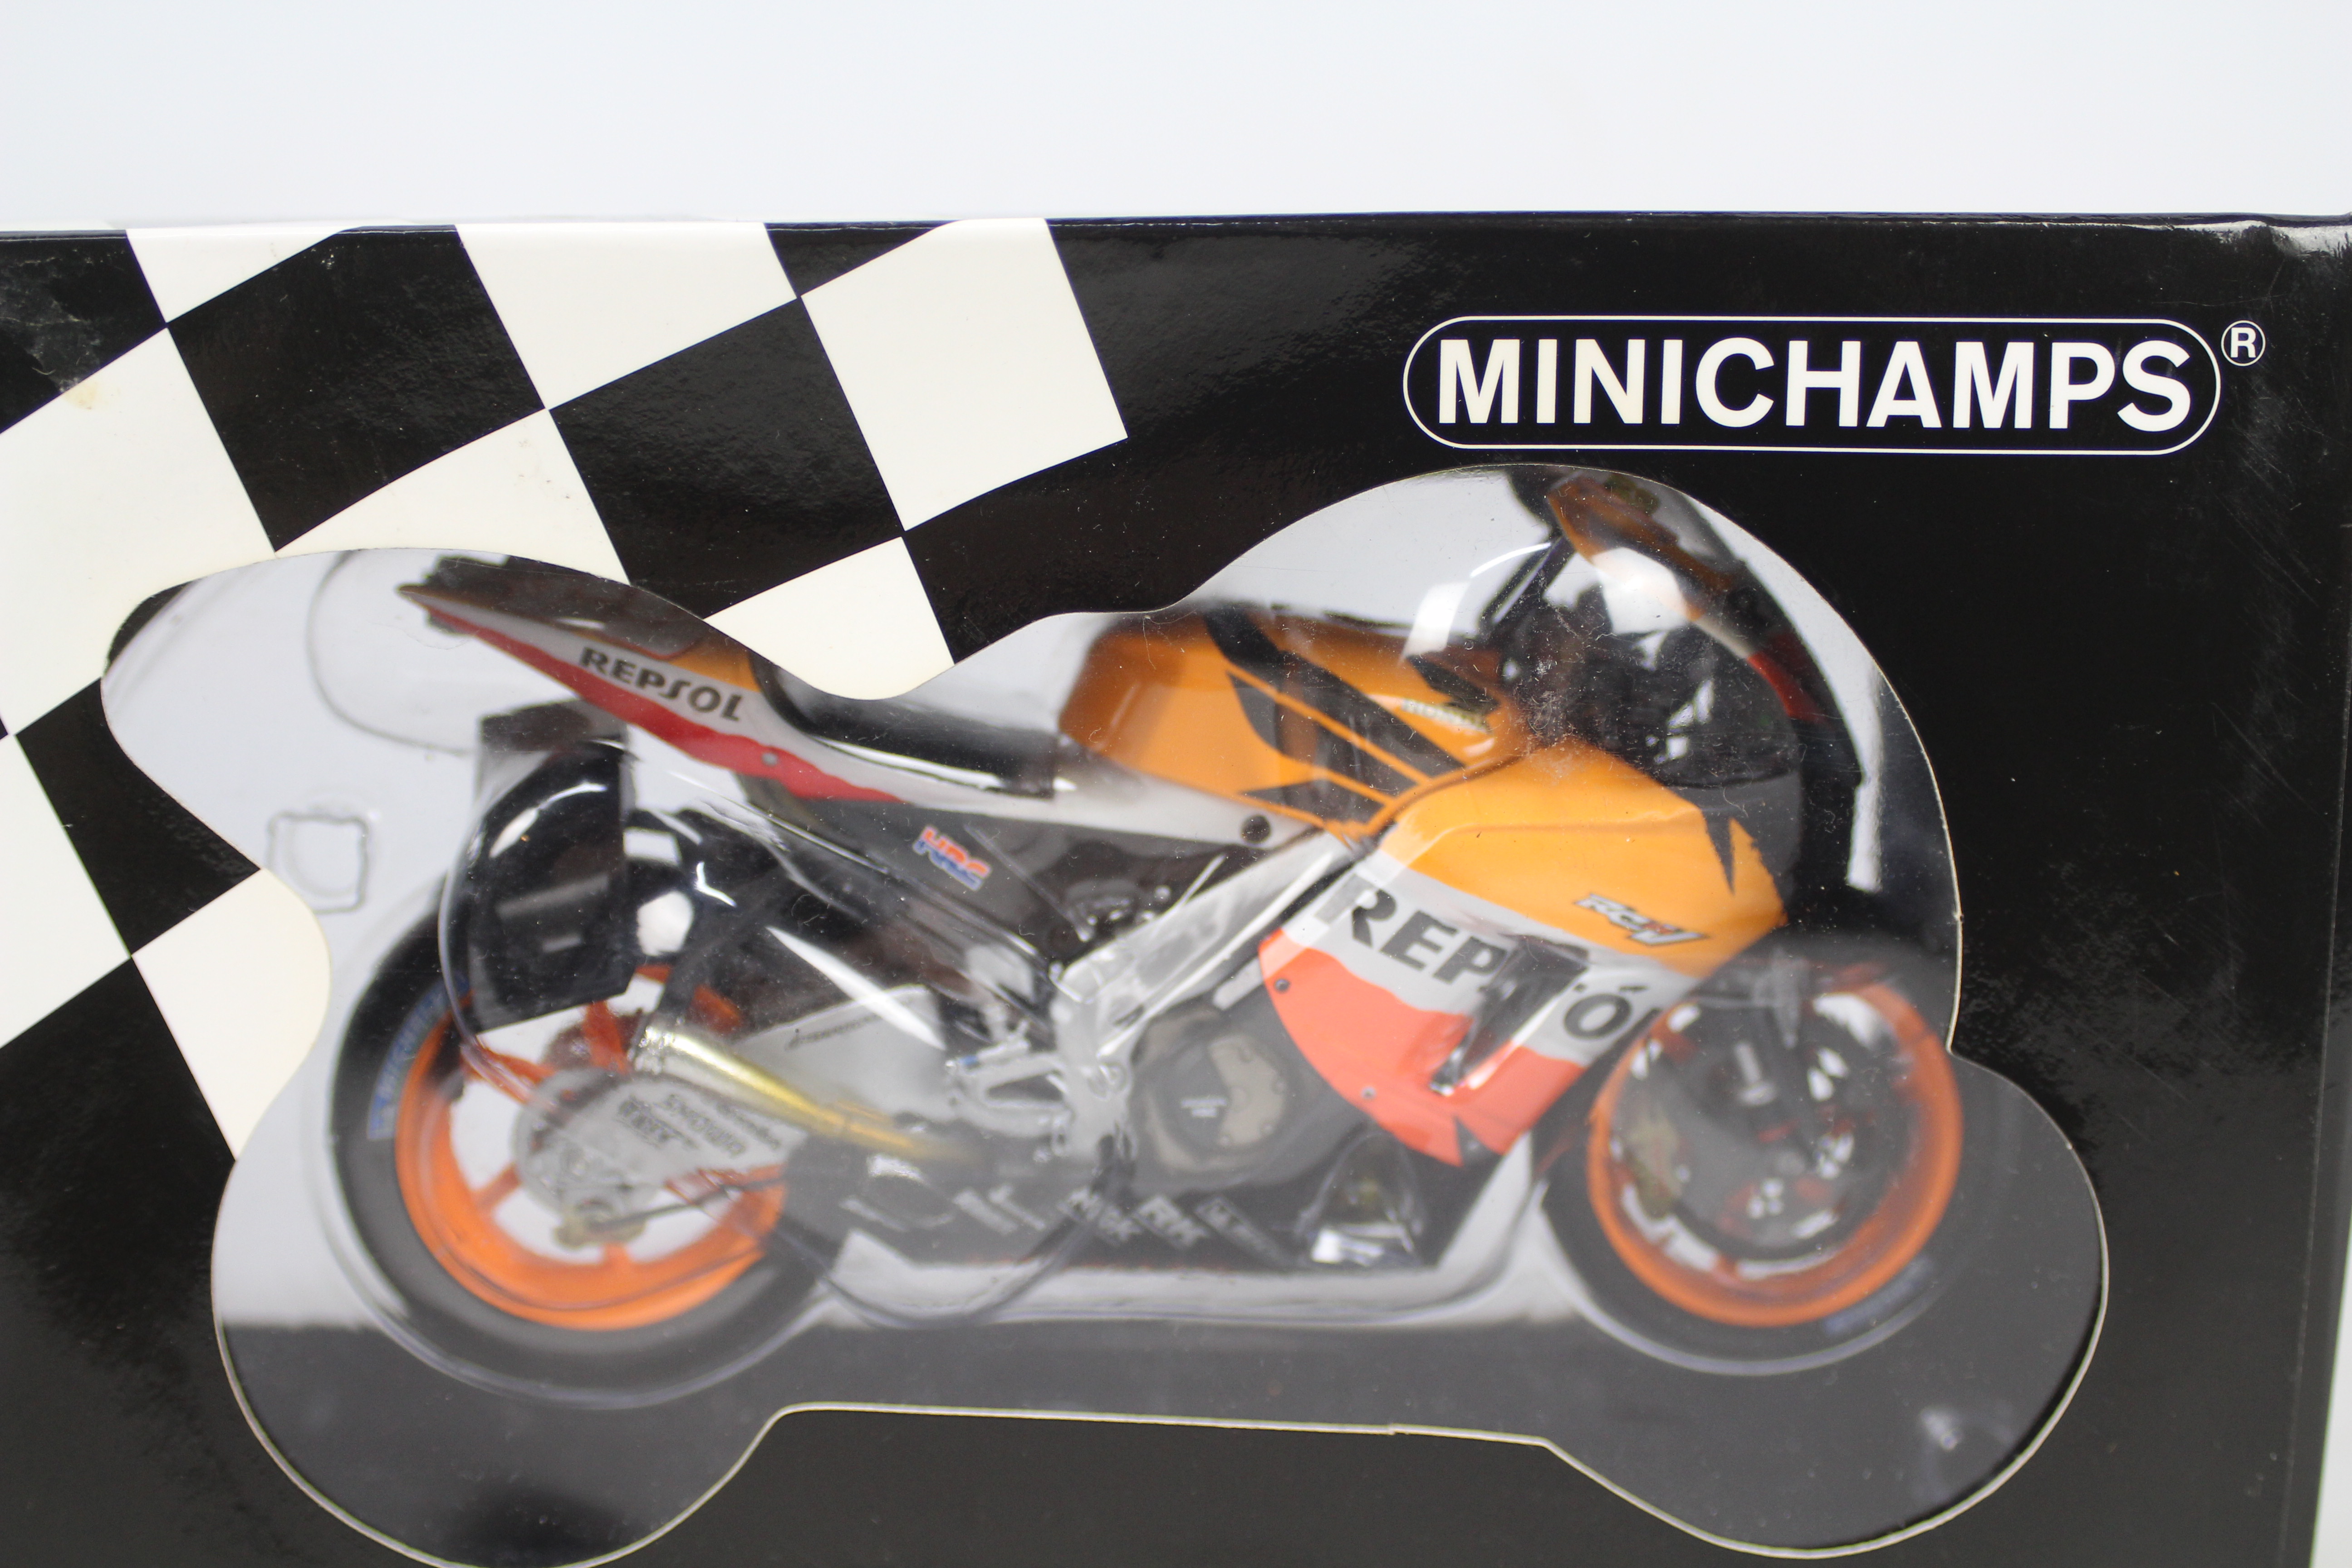 Minichamps - A boxed Minichamps #122061069 Honda RC211V Repsol Honda Team 'Nicky Hayden' MotoGP - Image 2 of 2